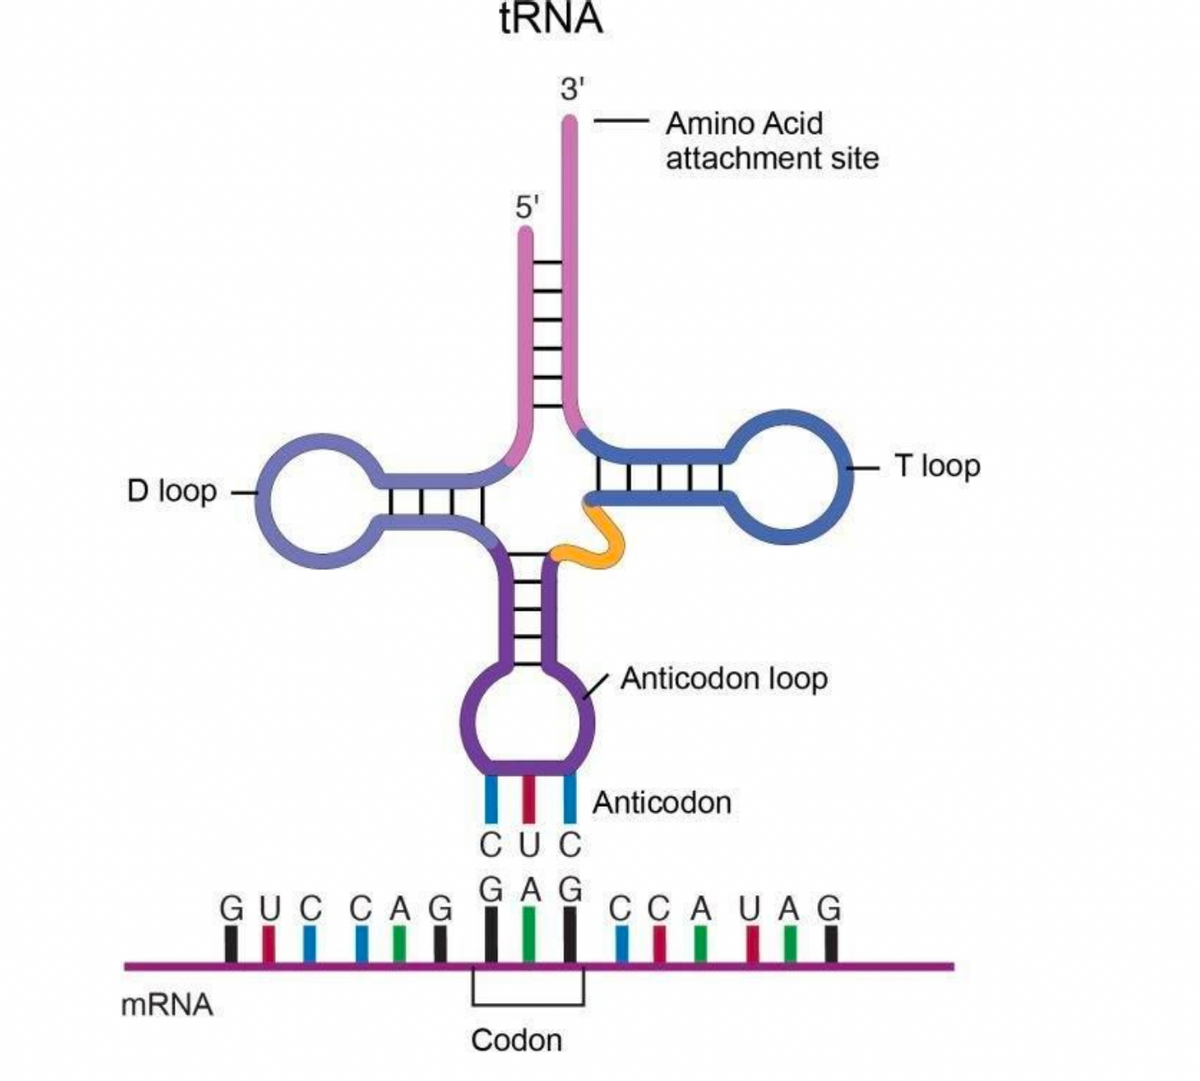 D loop
mRNA
C
GUC CAG
tRNA
5'
3¹
Amino Acid
attachment site
Codon
O
Anticodon loop
뉴
CUC
GAG CCA UAG
Anticodon
T loop